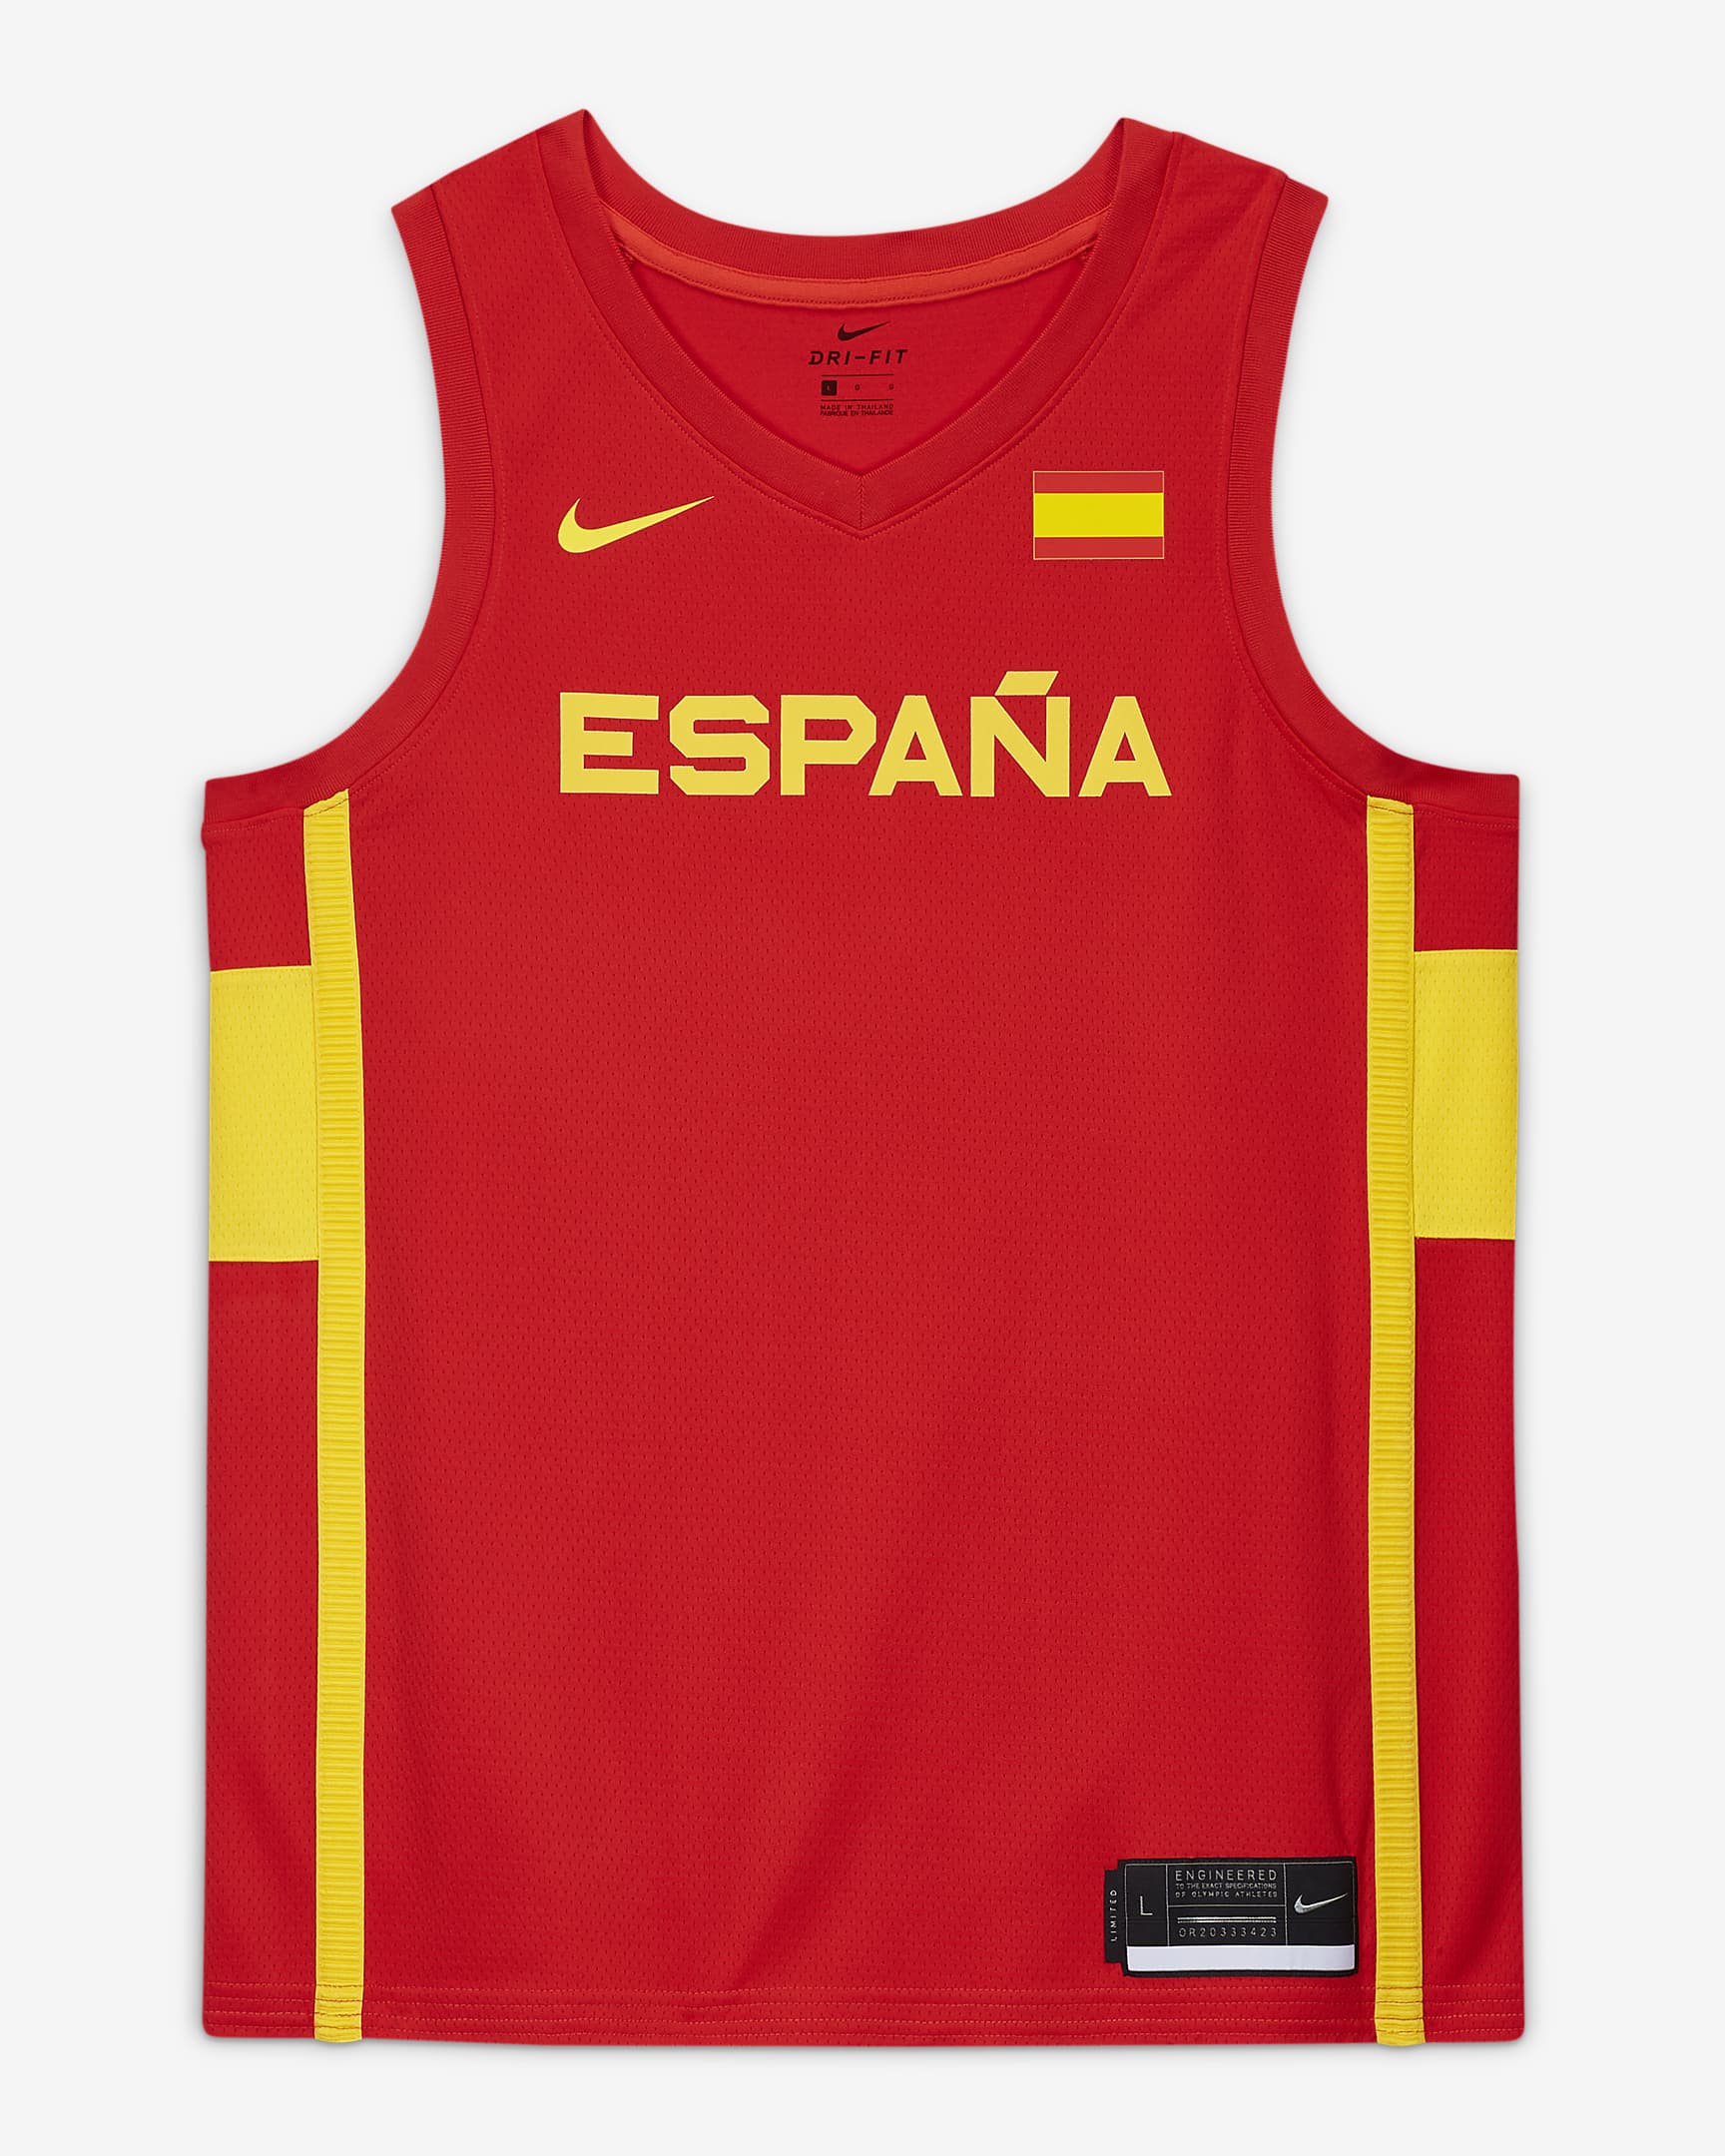 Spain Nike (Road) Limited Men's Nike Basketball Jersey. Nike NZ